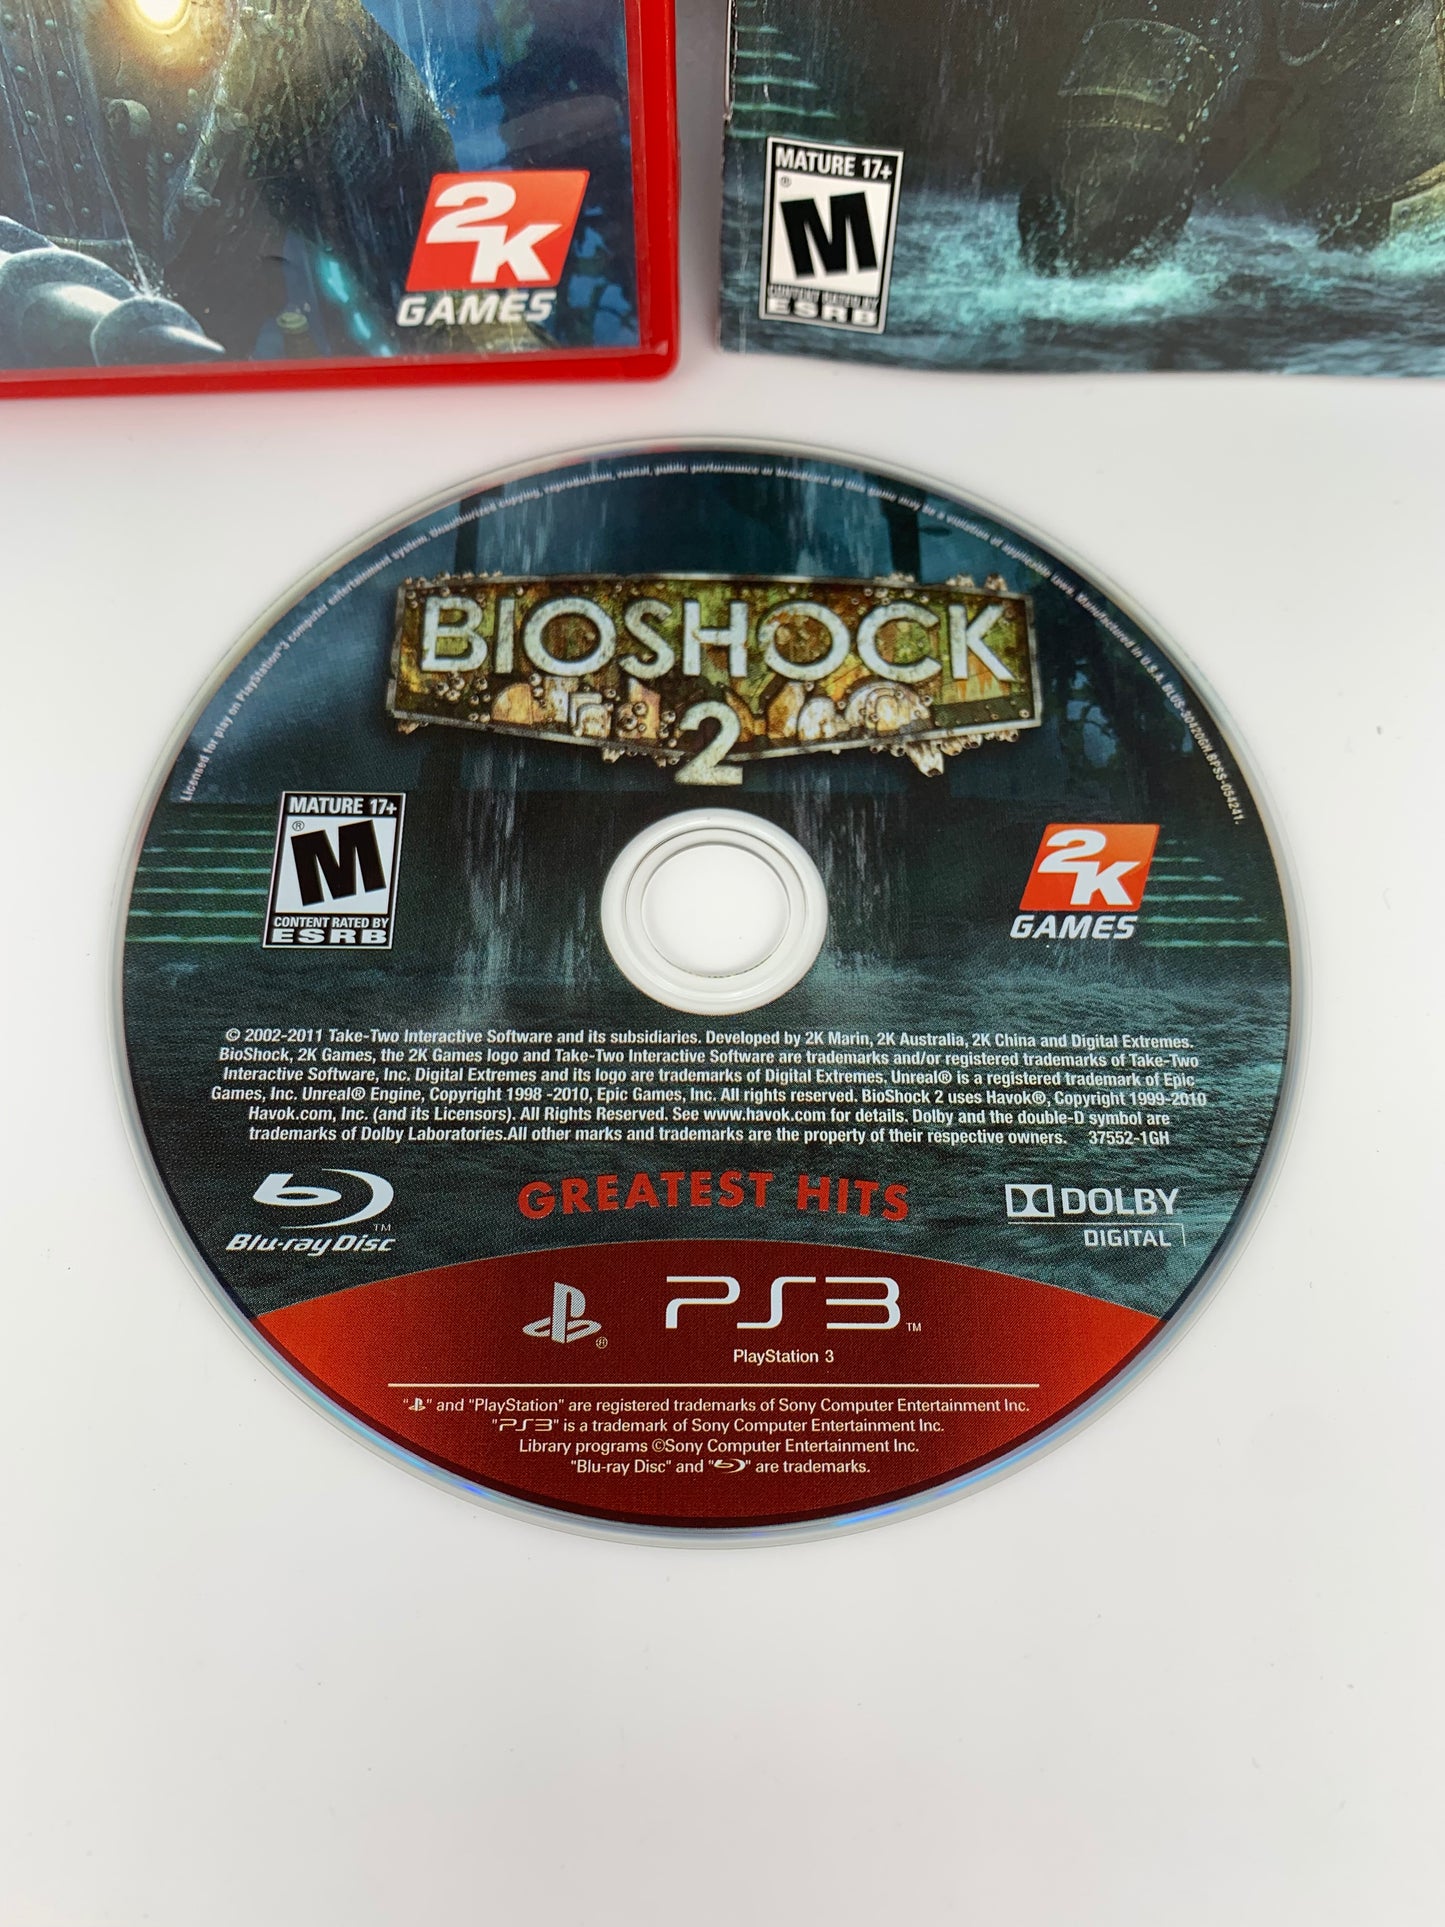 SONY PLAYSTATiON 3 [PS3] | BiOSHOCK 2 | GREATEST HiTS